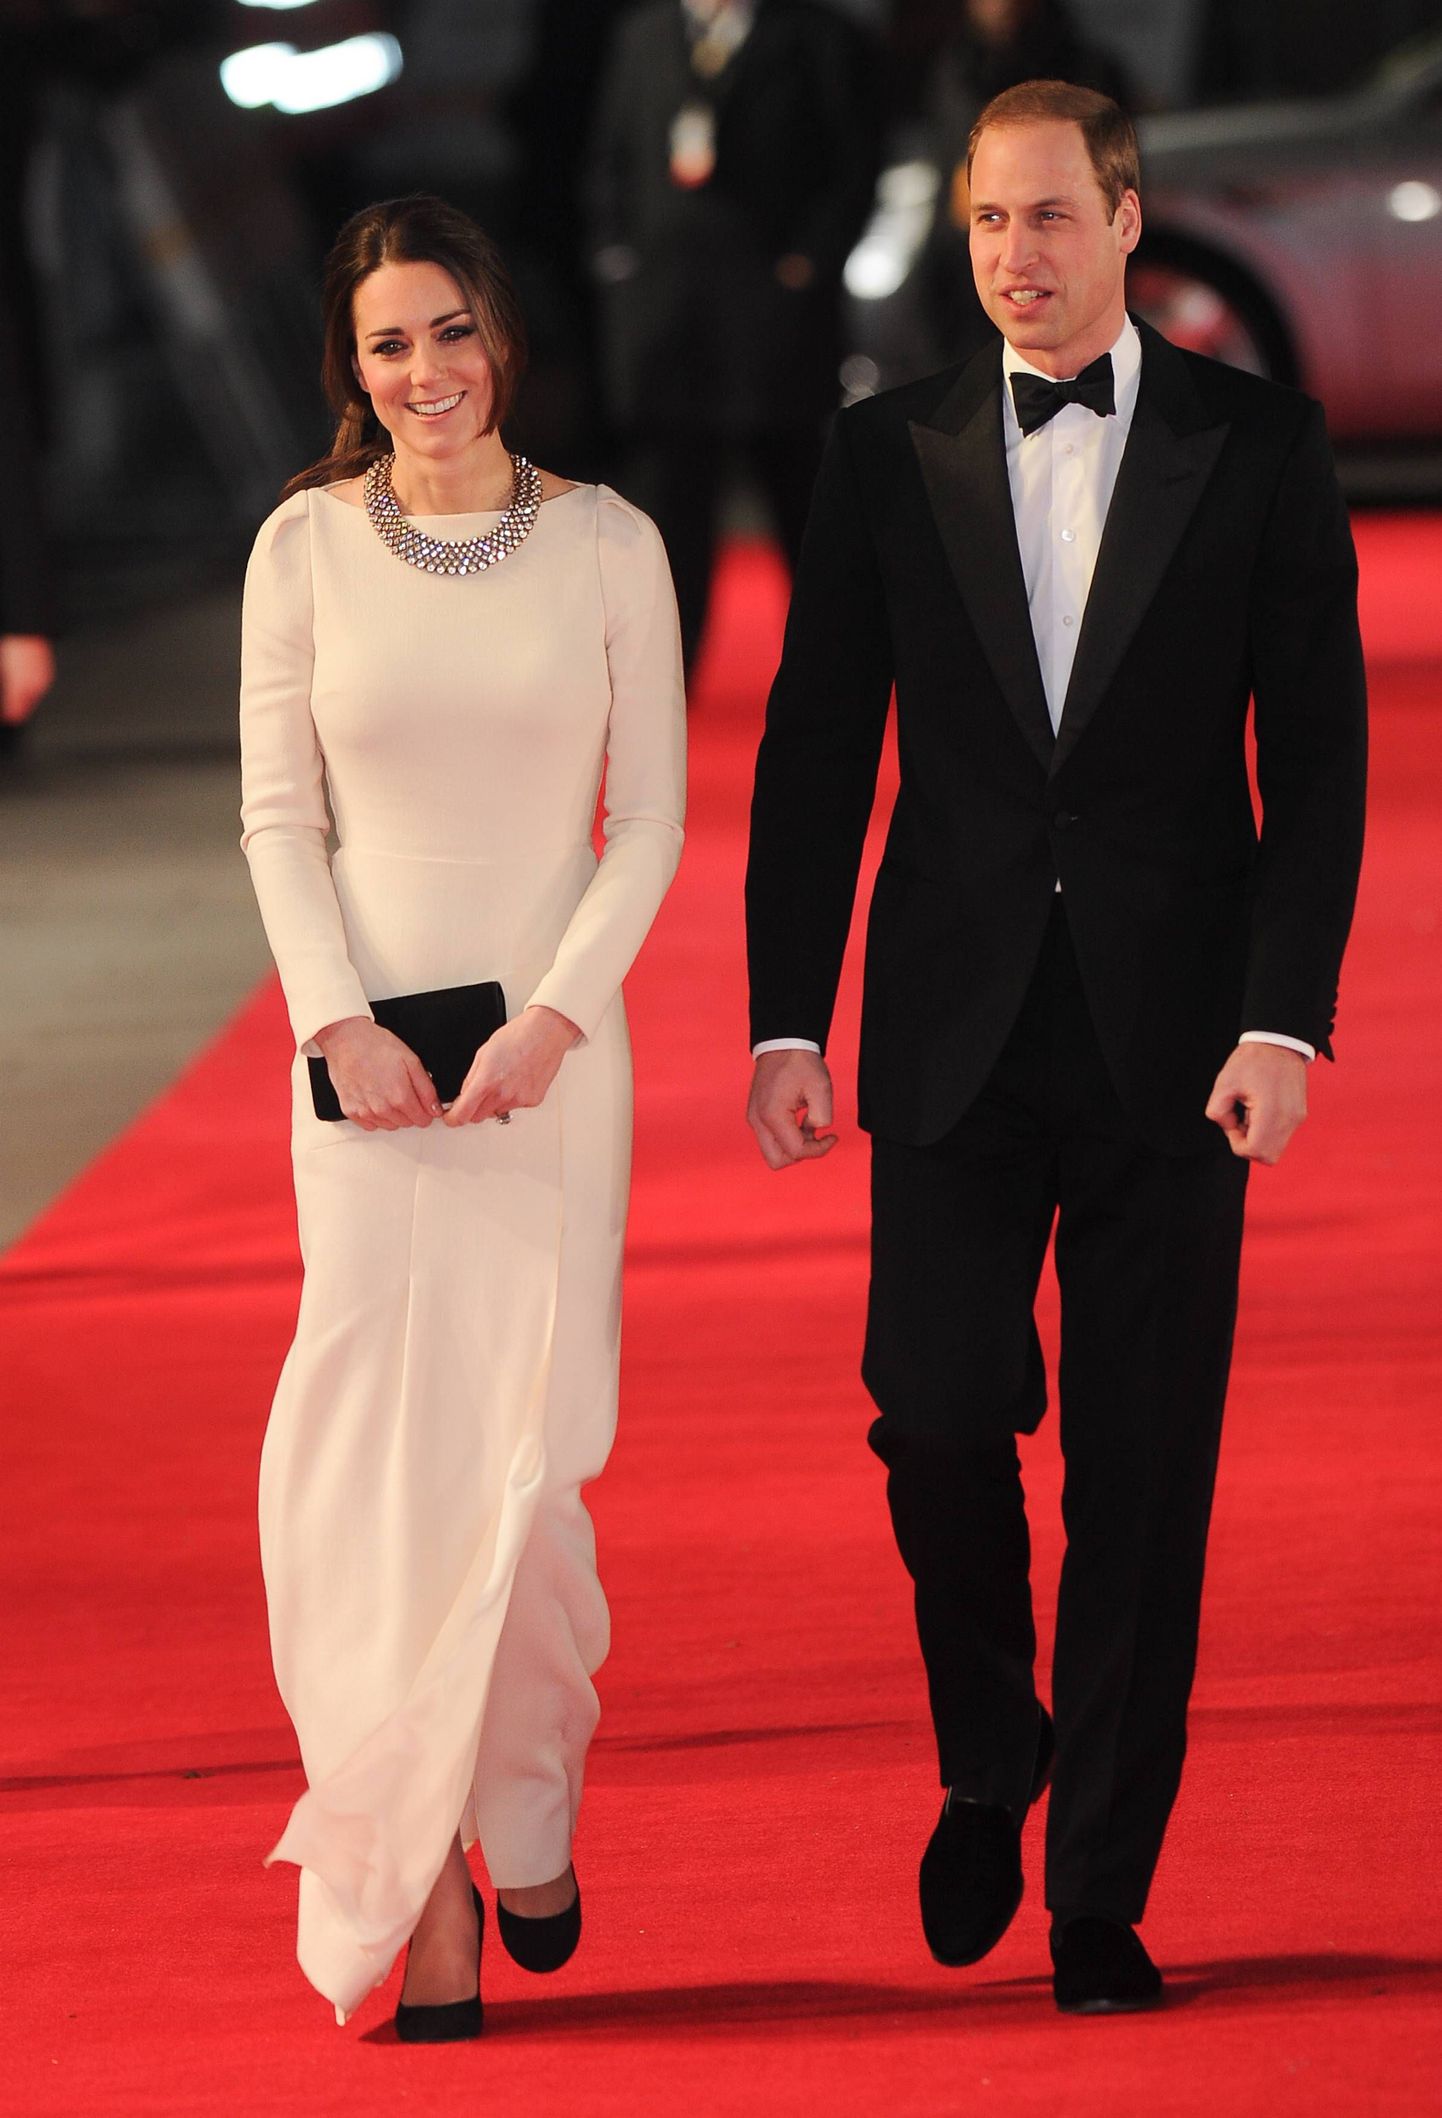 Kate Middleton ja prints William